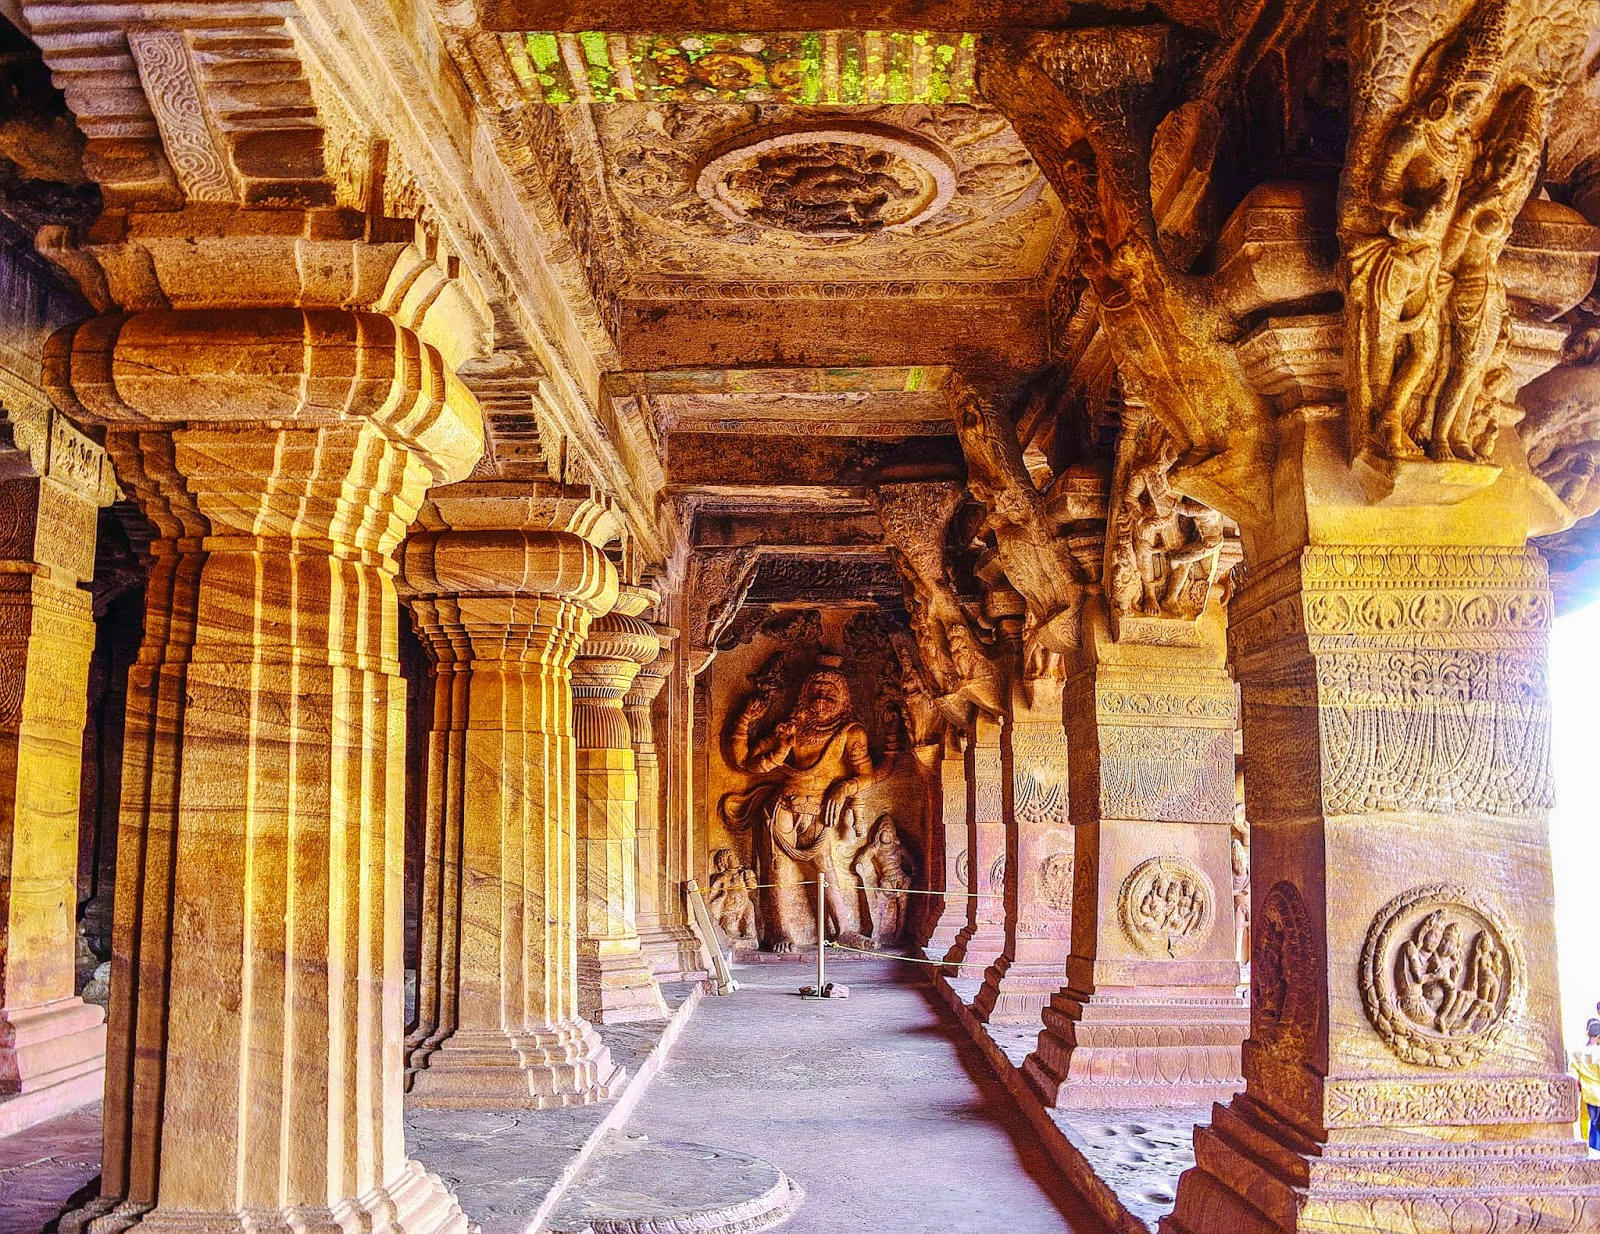 Badami Cave Temples